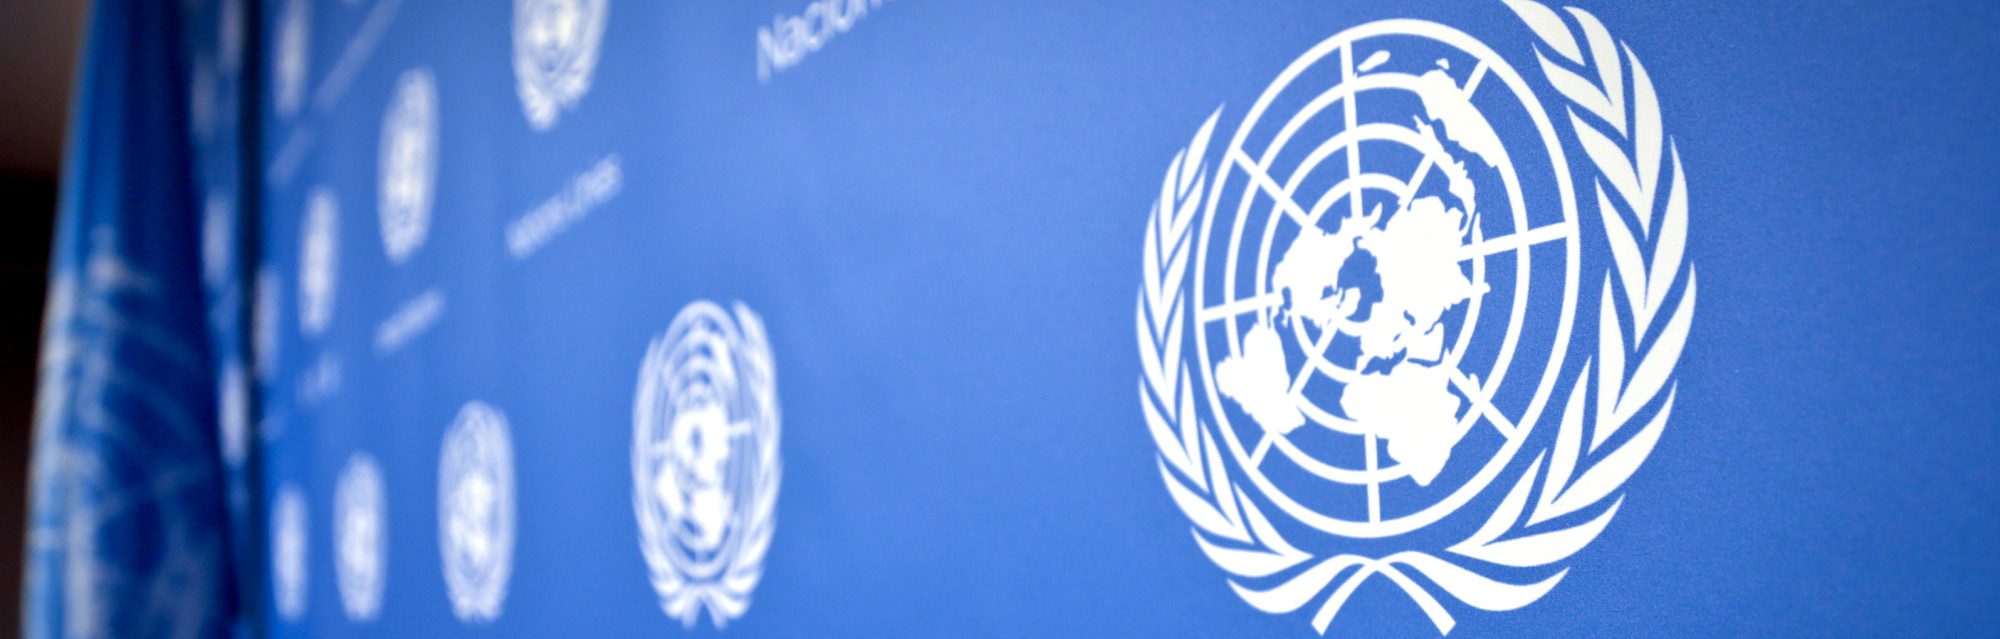 Оон 16. ООН совет безопасности Женева. День ООН. Прав человека ООН. Международное право ООН.